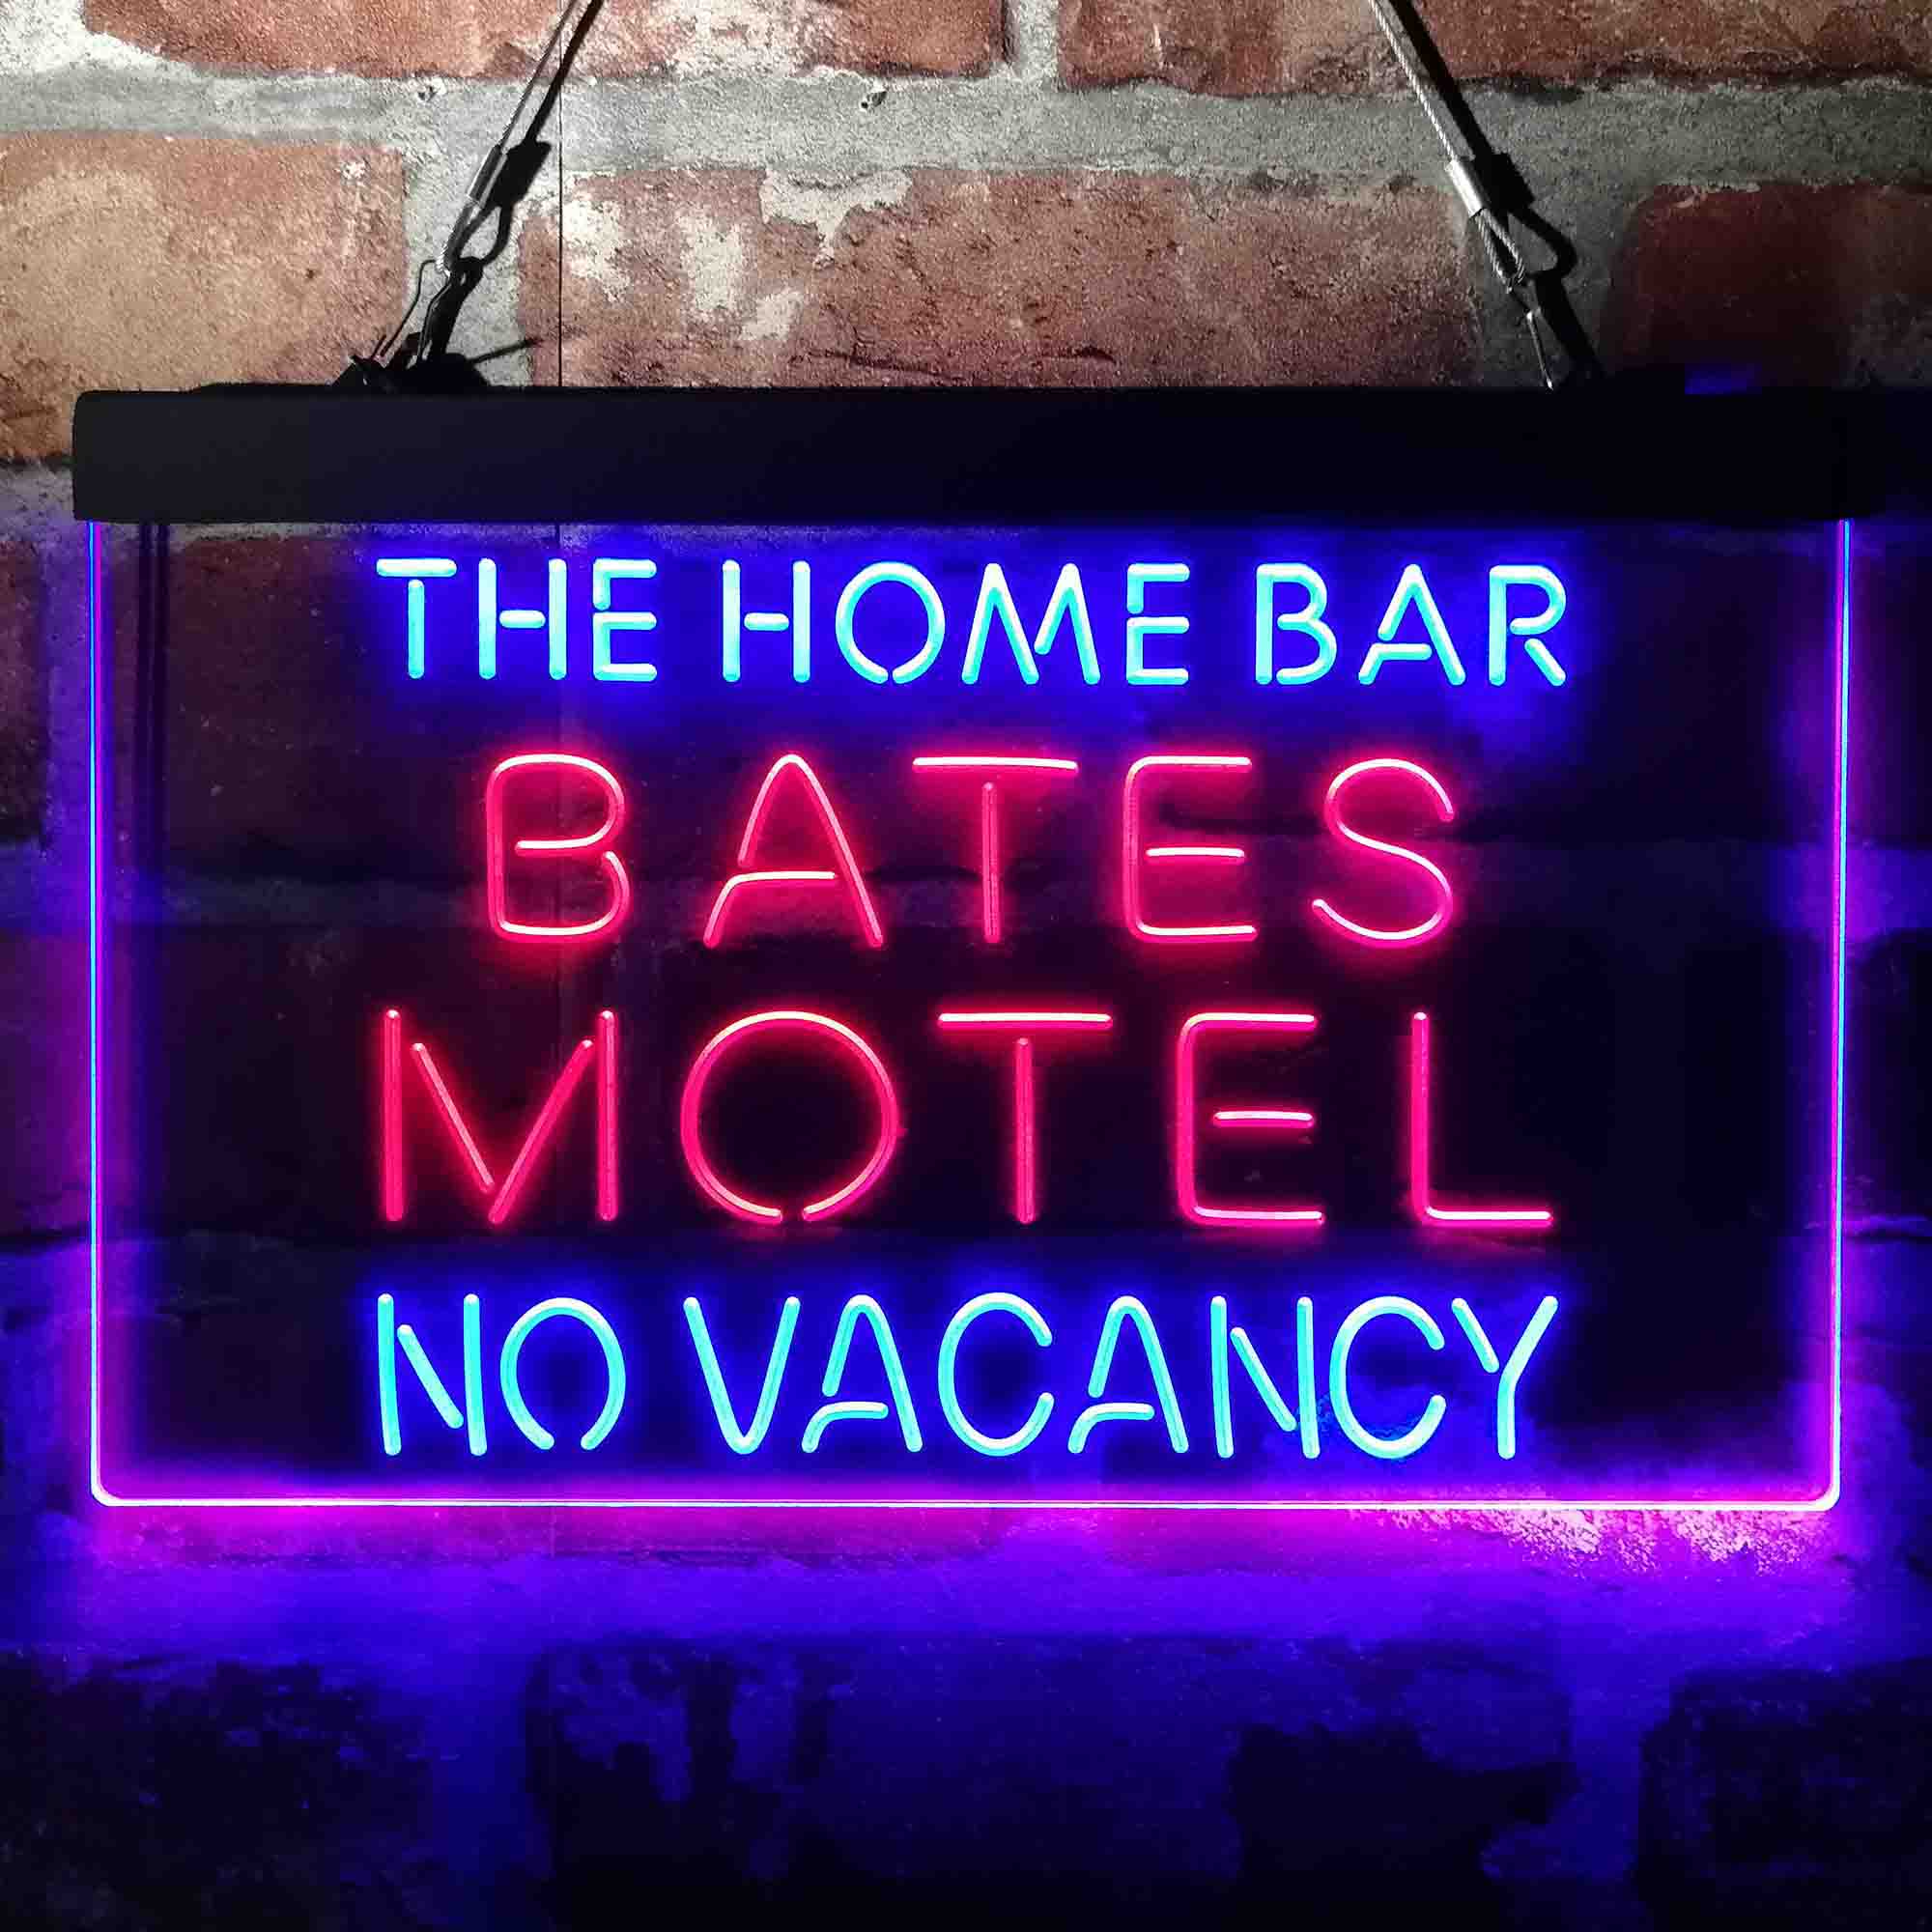 Bates Motel No Vacancy Custom Personalized Neon-Like LED Sign